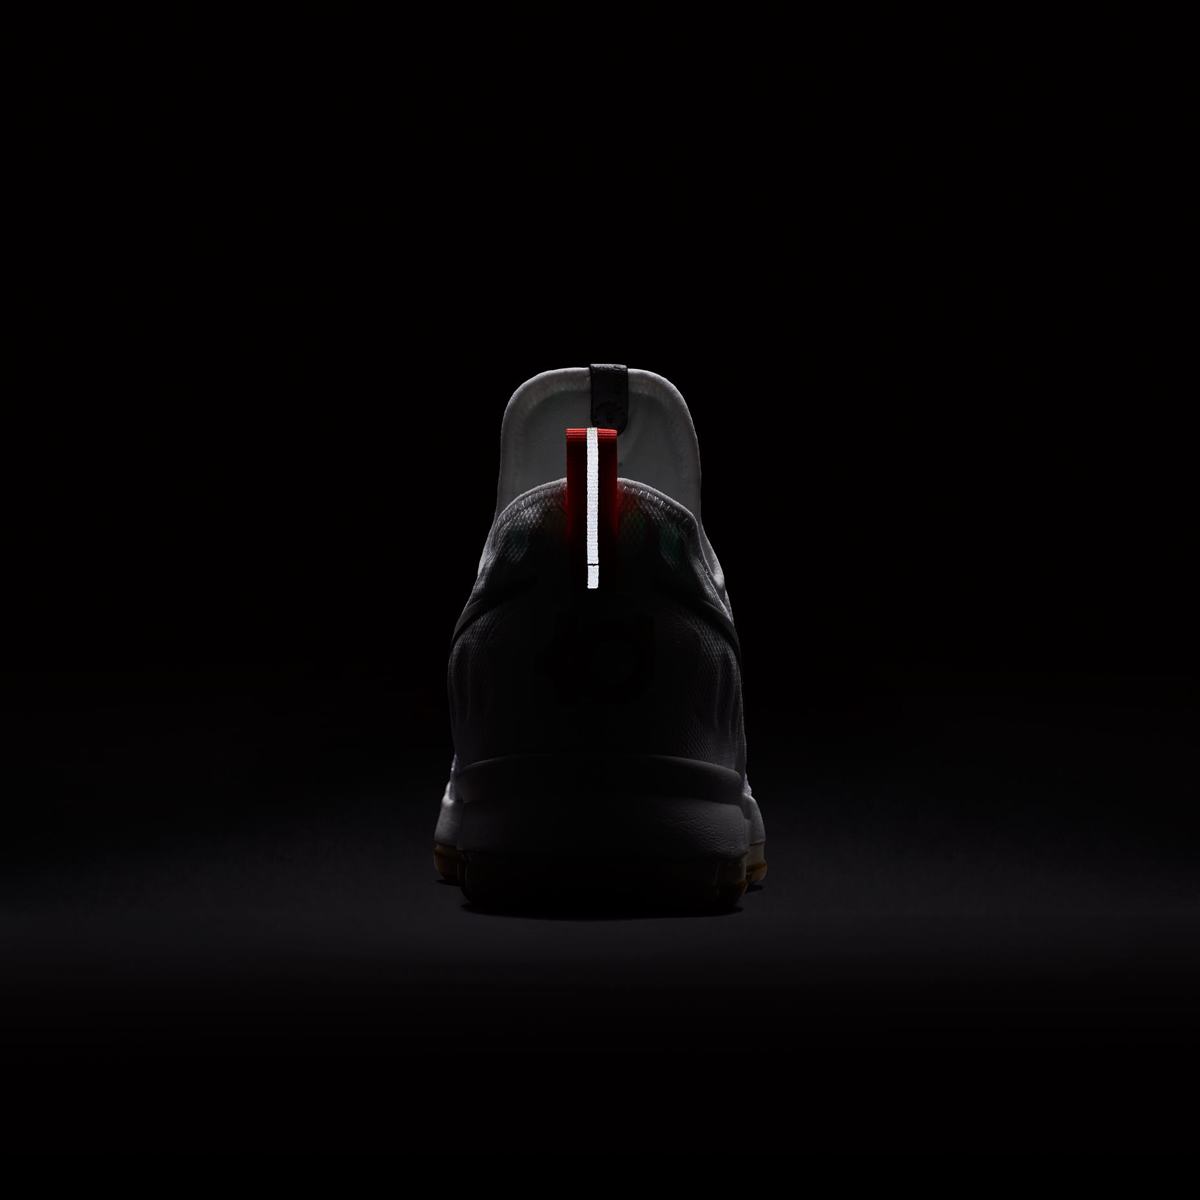 Кроссовки для баскетбола Nike Zoom KD 9